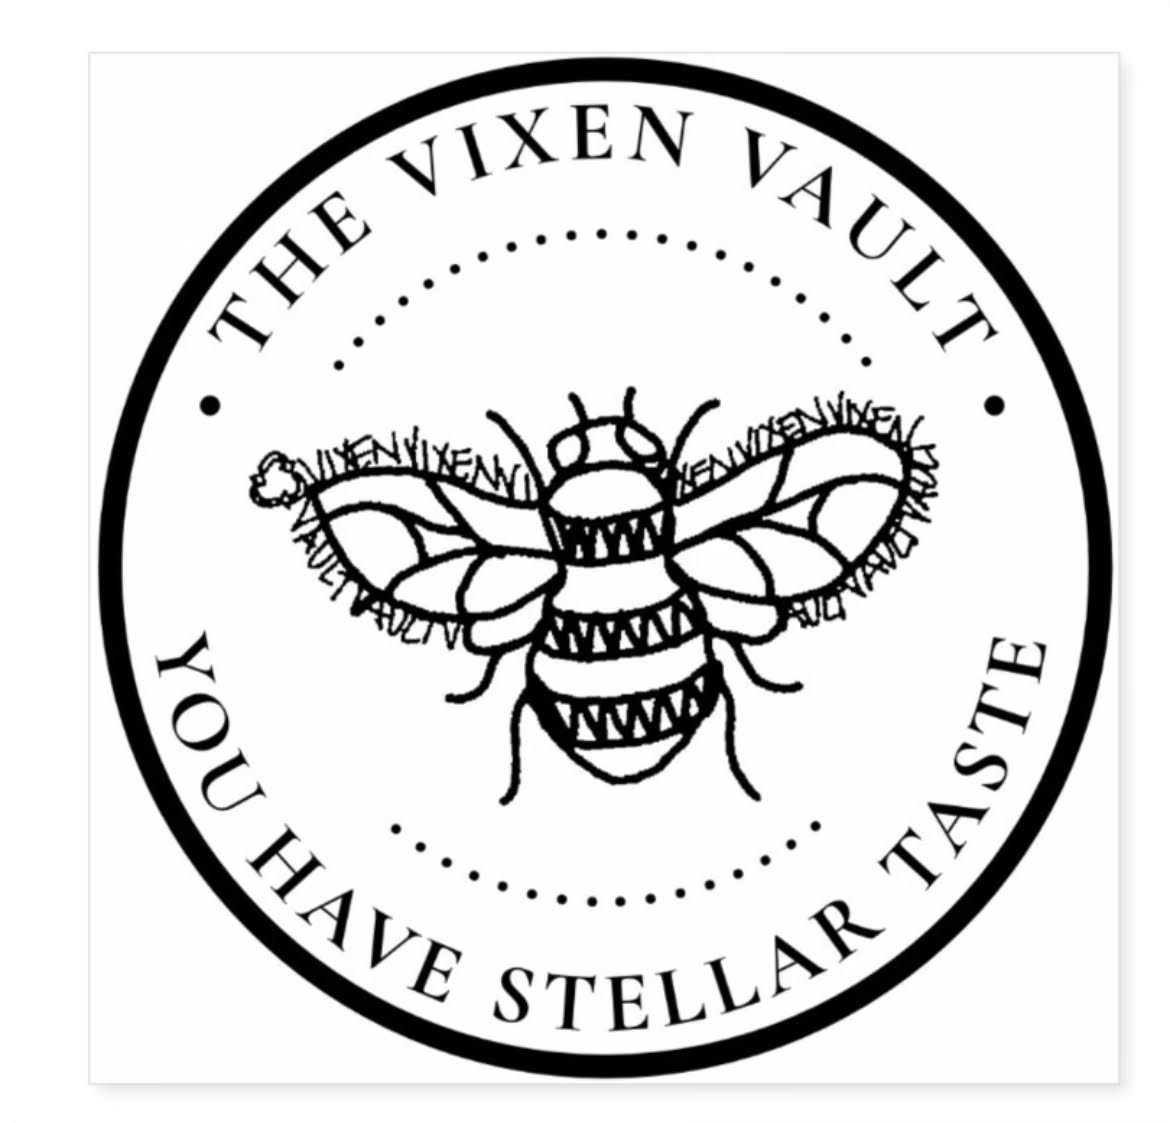 The Vixen Vault